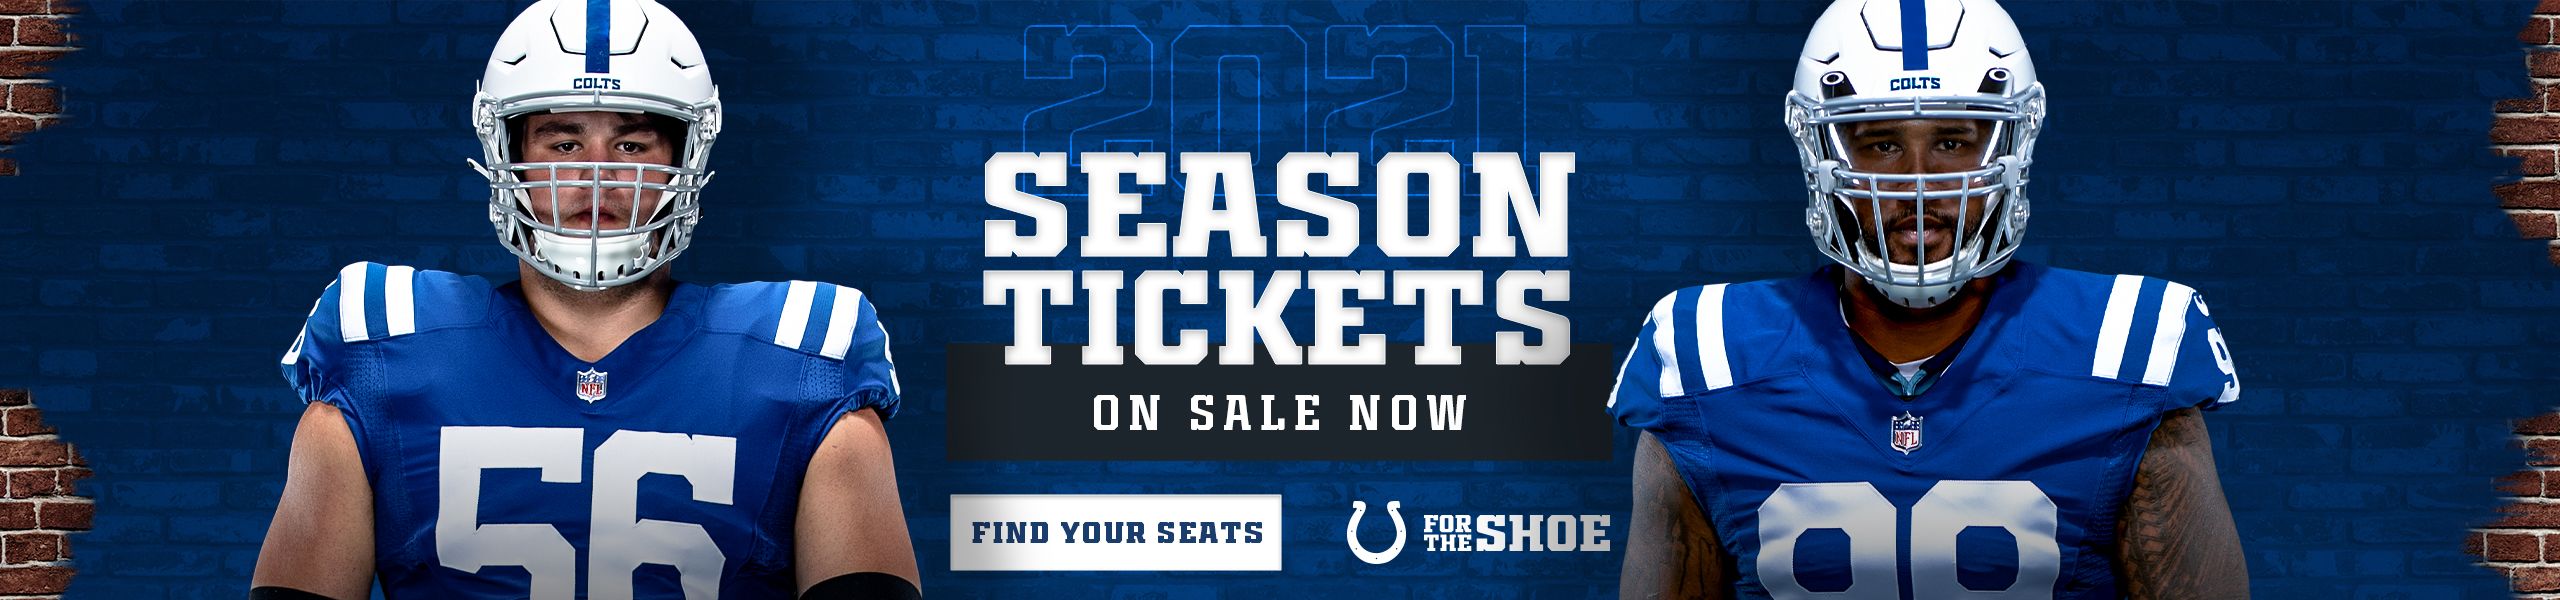 Colts Season Tickets